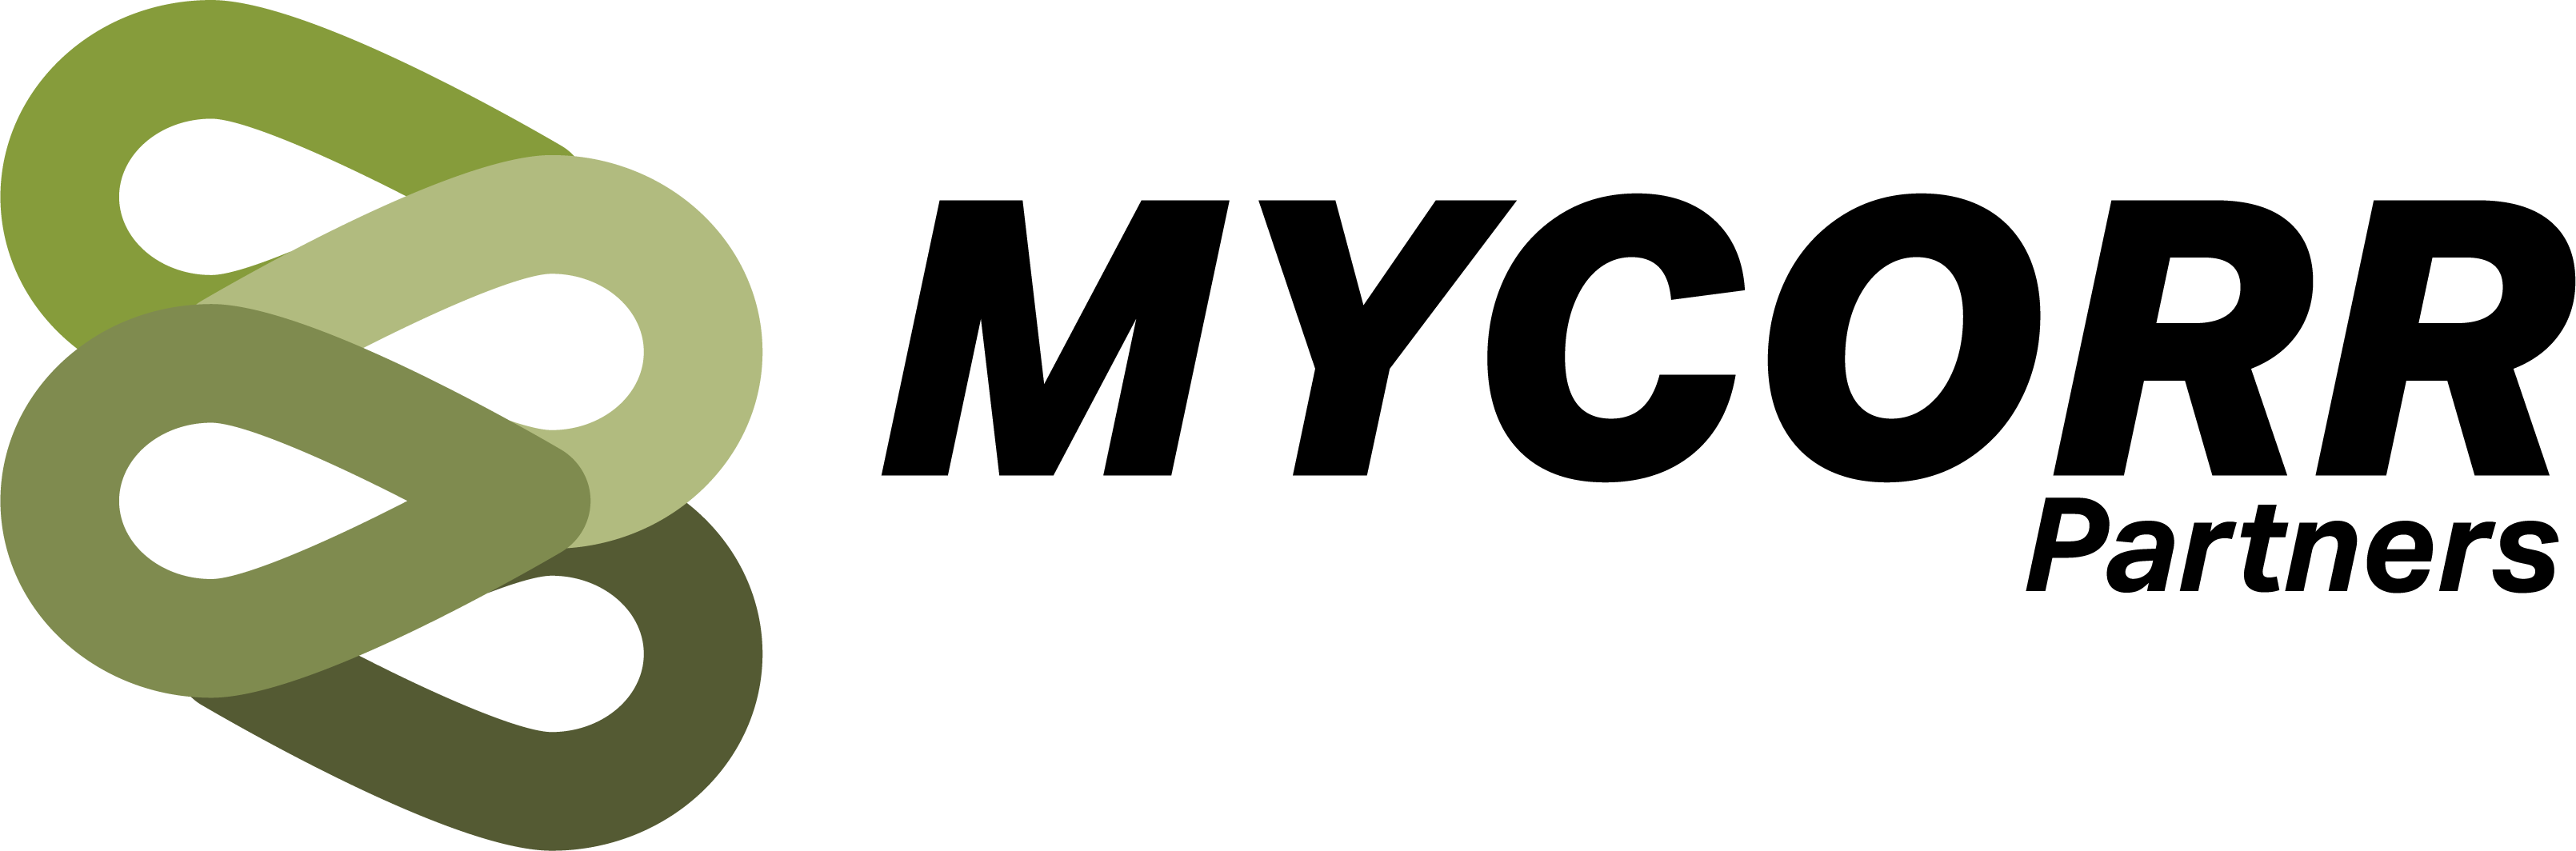 LOGO 1 Mycorr logo vector